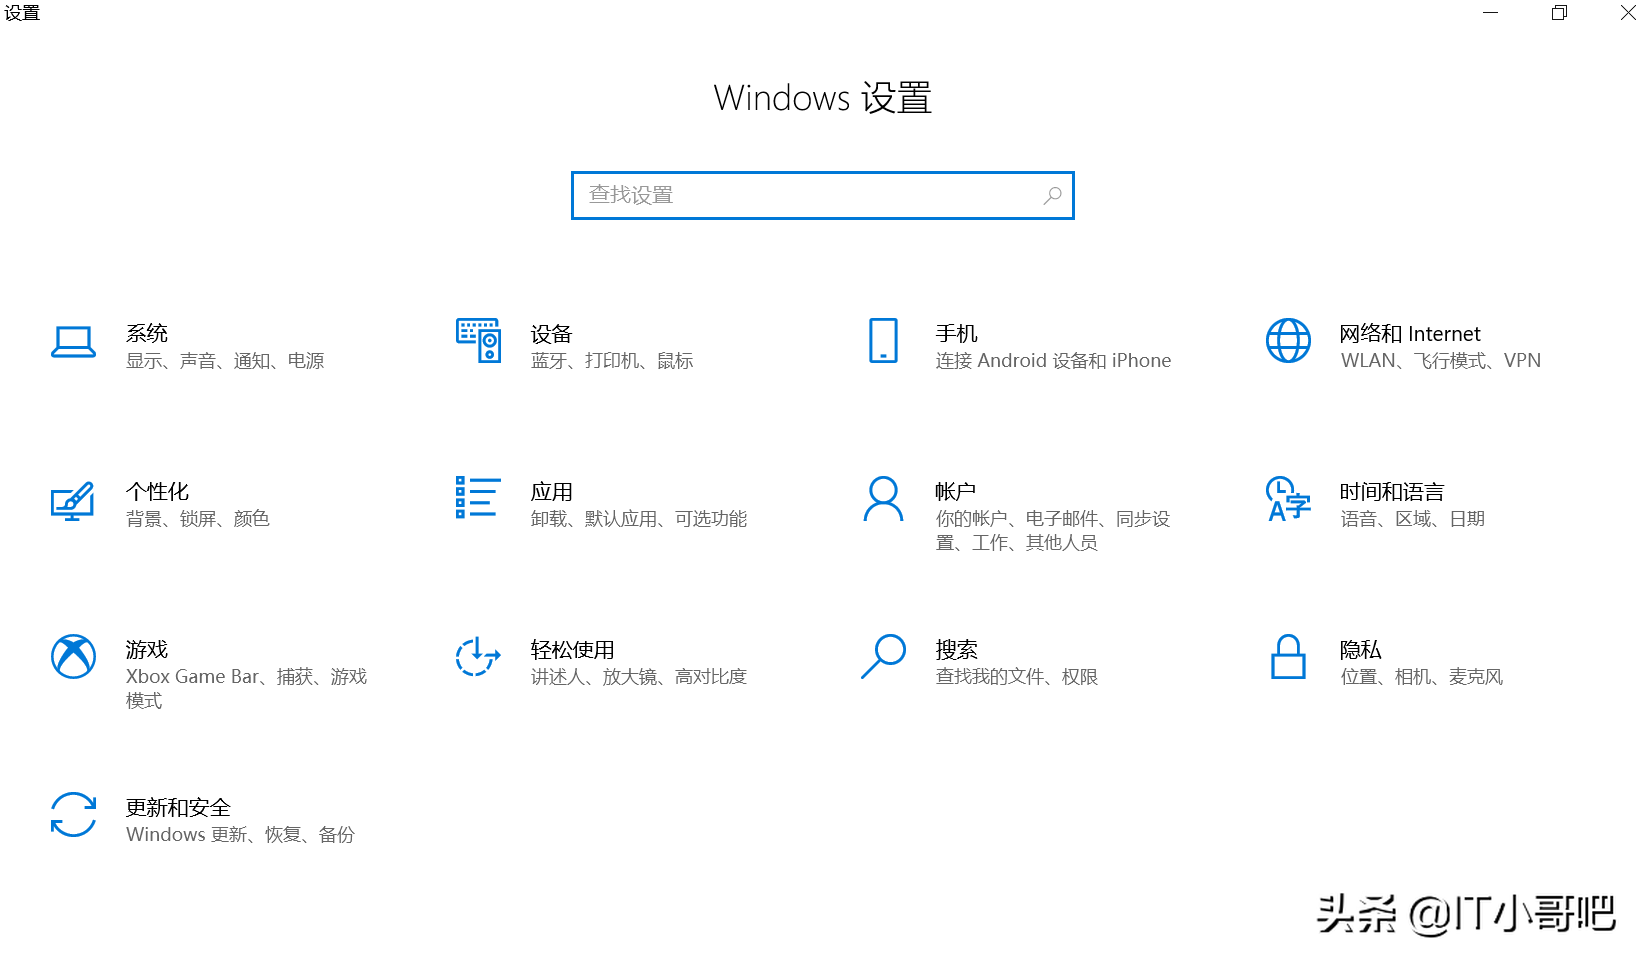 windows自带磁盘加密工具BitLocker用法详细讲解